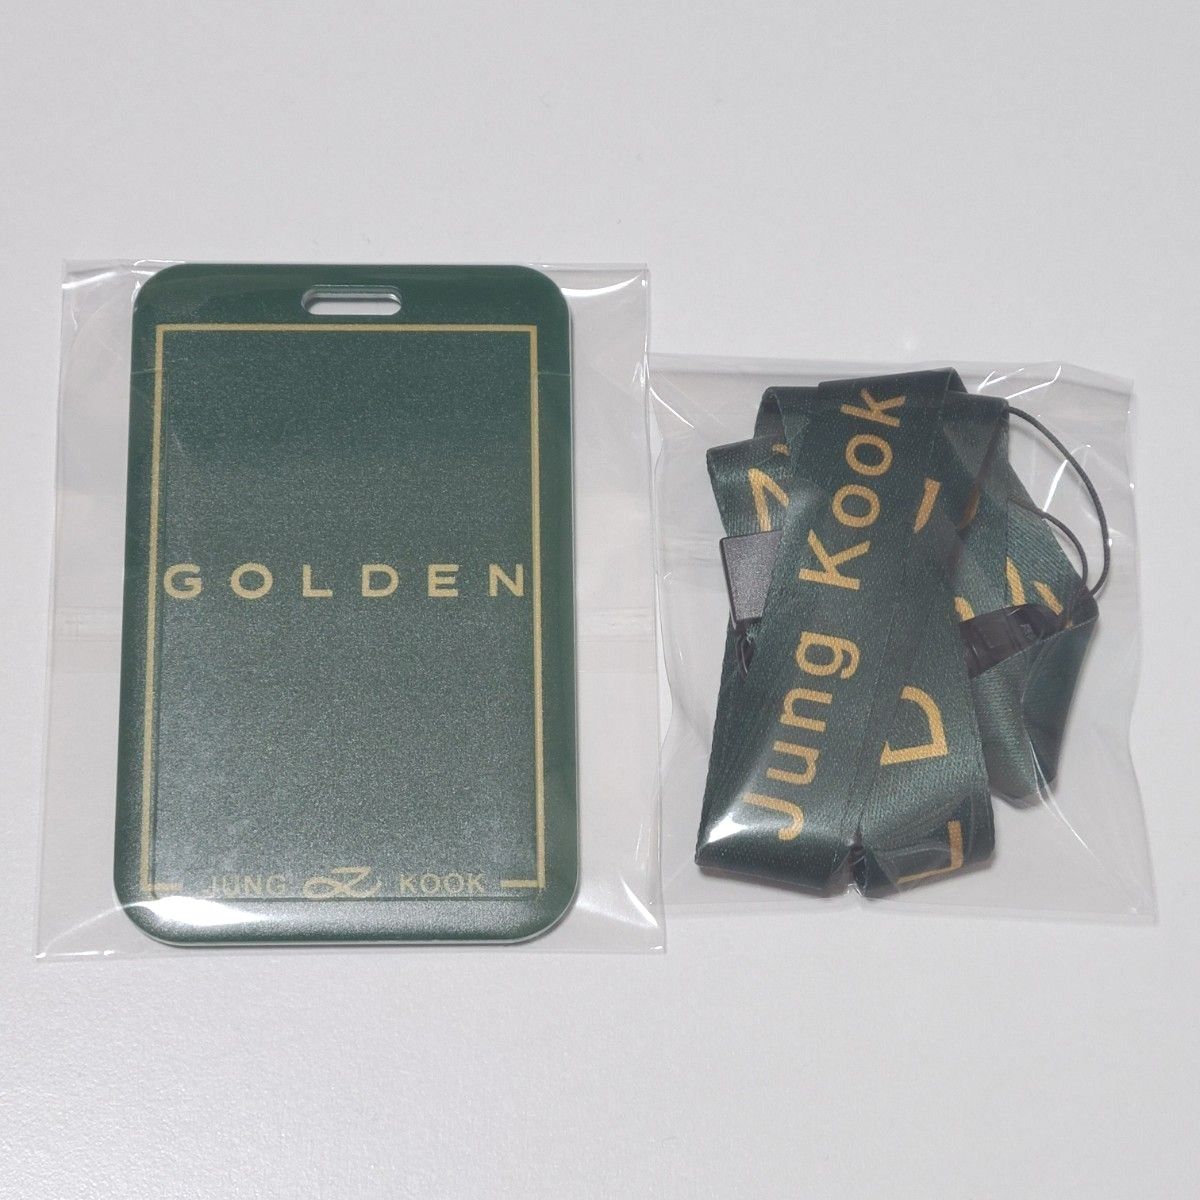 GOLDEN JUNGKOOK　ロングストラップ付き カードホルダー(グリーン)